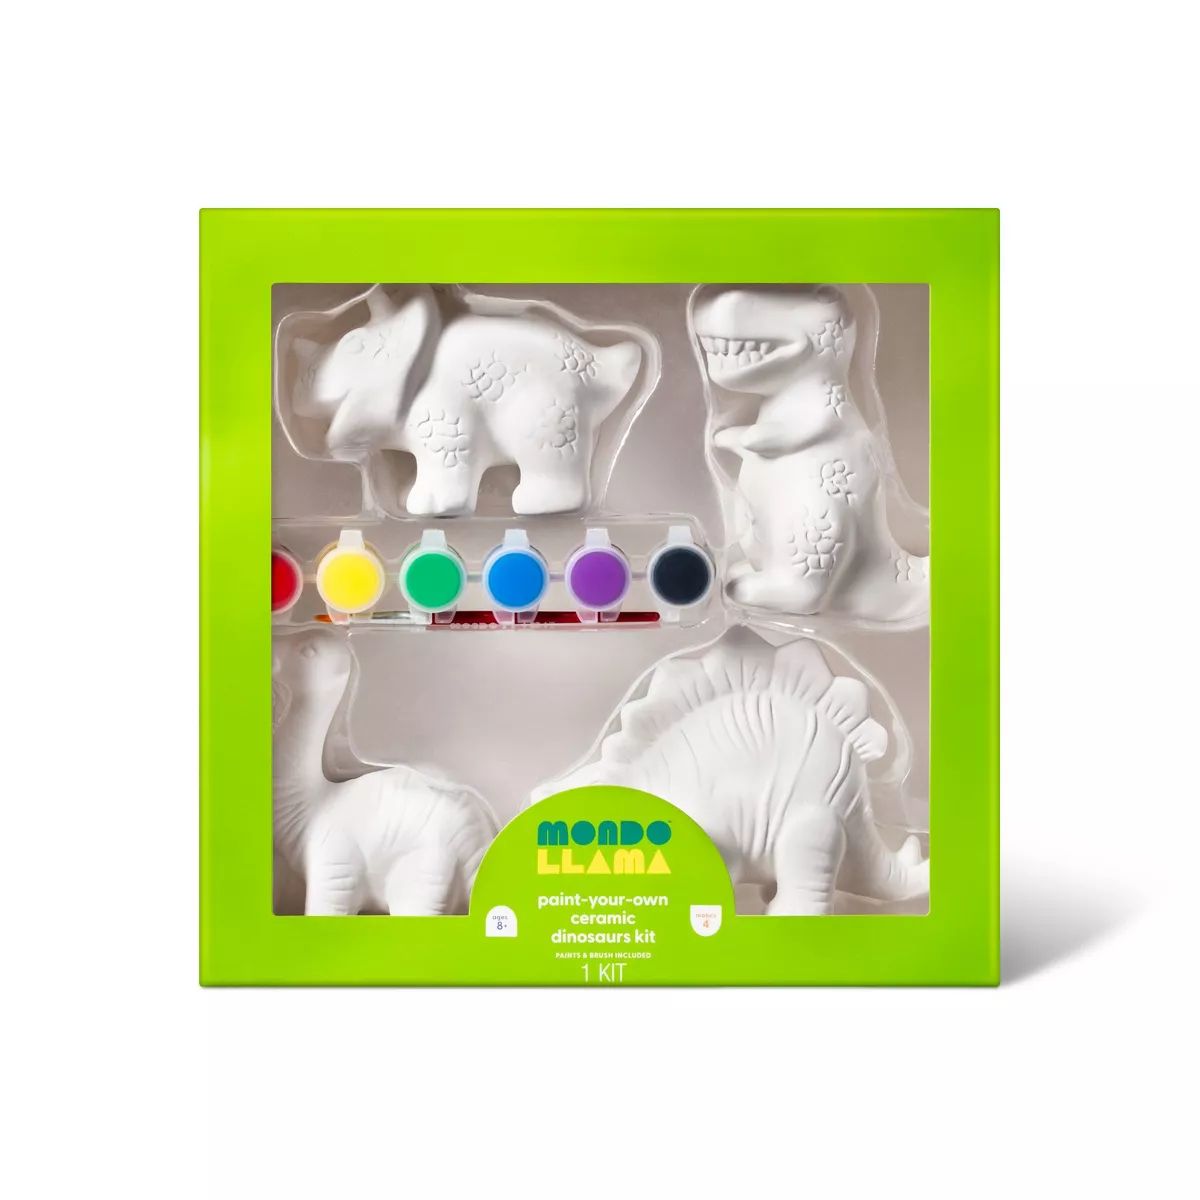 Paint-Your-Own Ceramic Dinosaurs Kit - Mondo Llama™ | Target